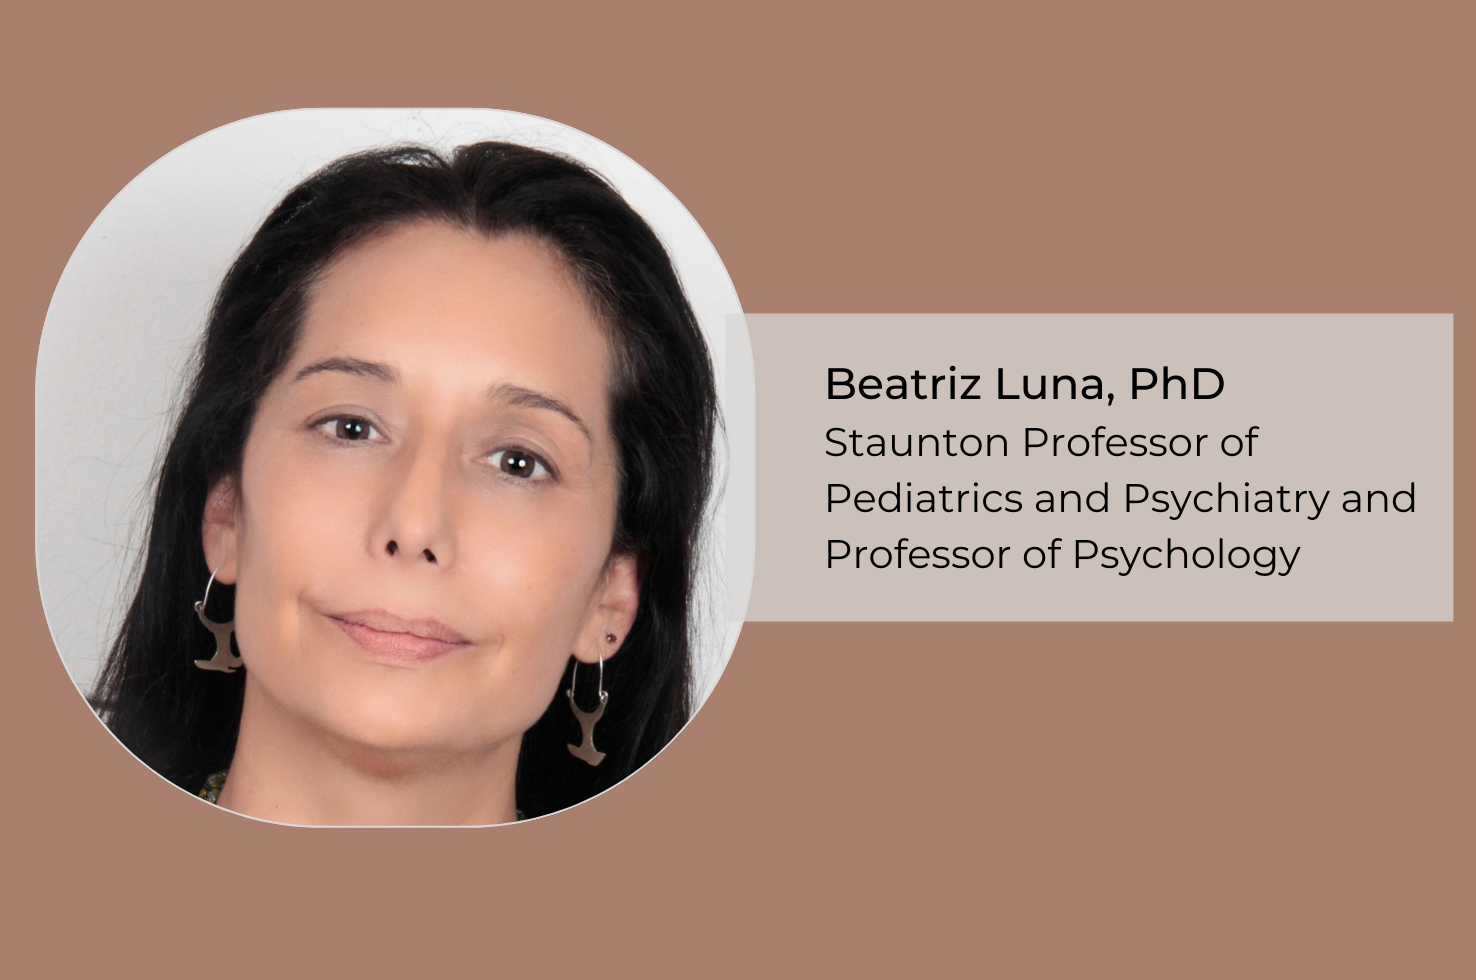 Bea Luna, PhD Receives MERIT Award